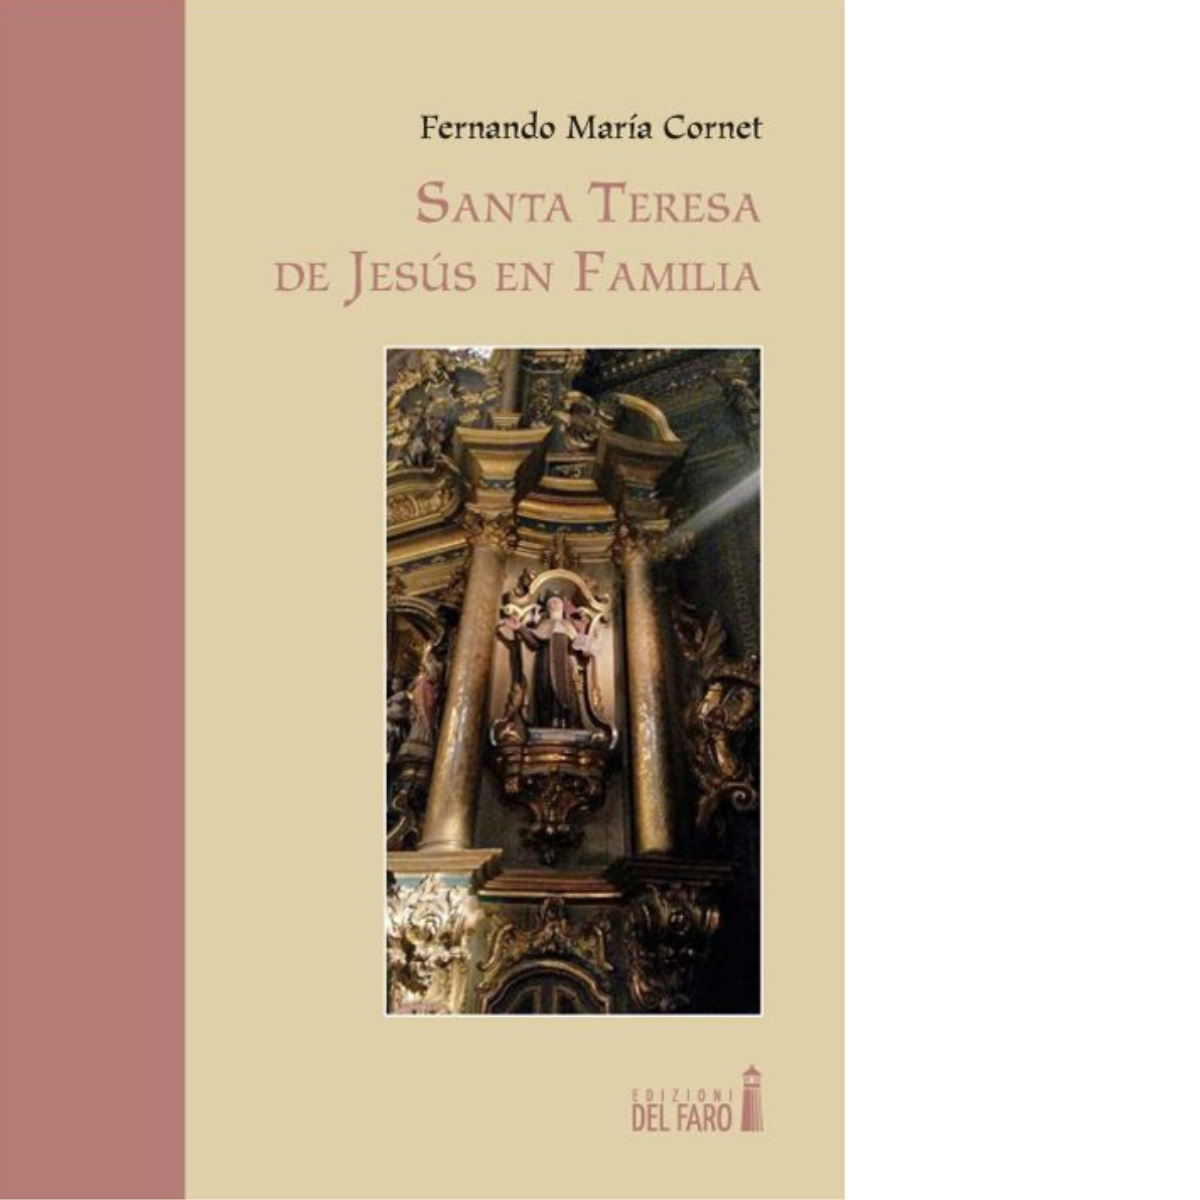 Santa Teresa de Jes?s en familia di Cornet Fernand M. - Del Faro, 2015